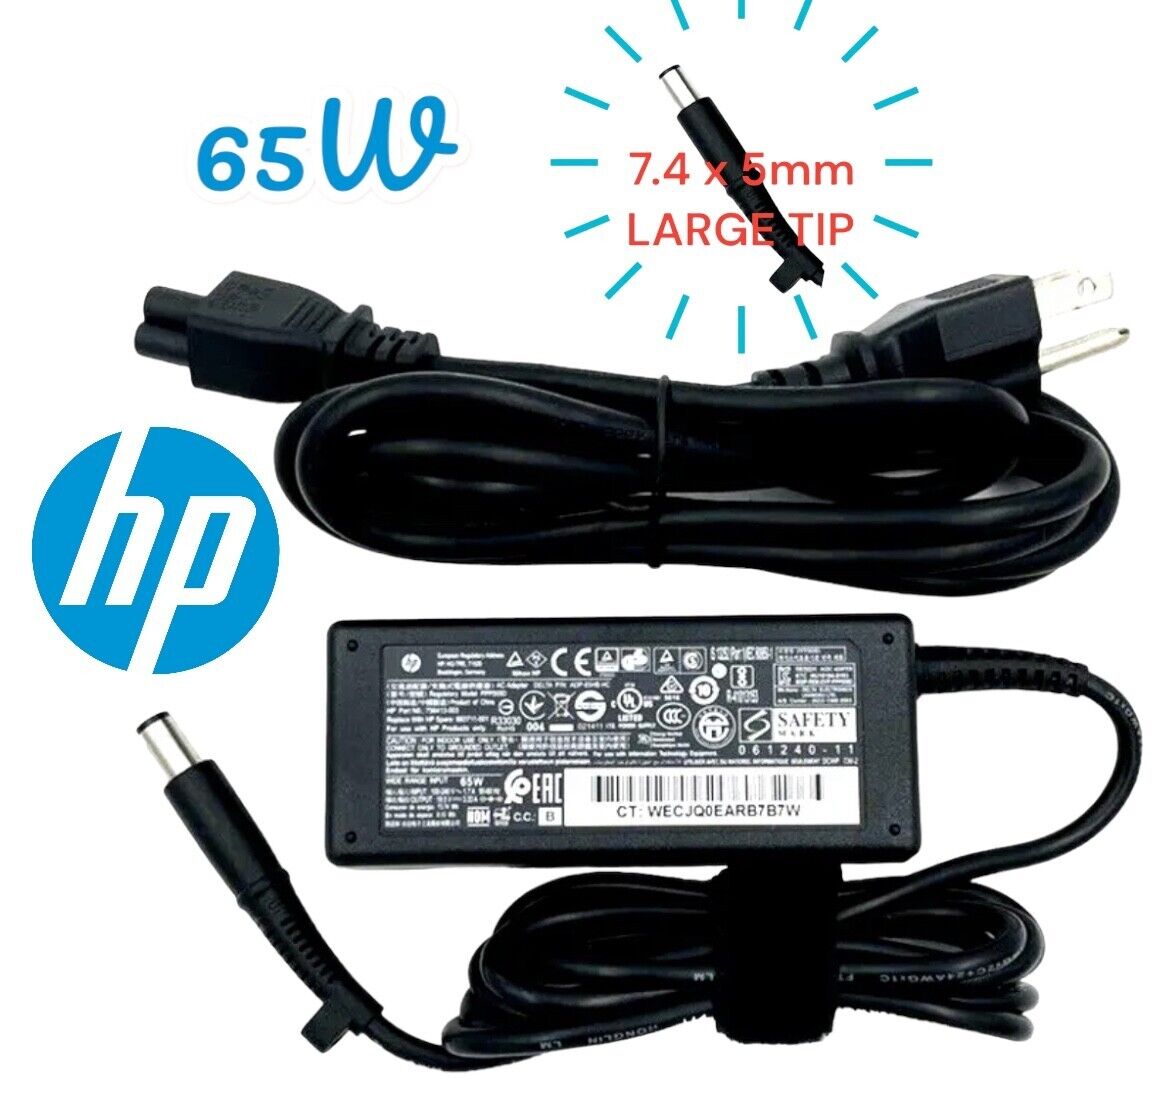 Genuine HP 65W Power Adapter 7.4mm EliteDesk 800 G1 G2 G3 Laptop Mini PC w/Cord